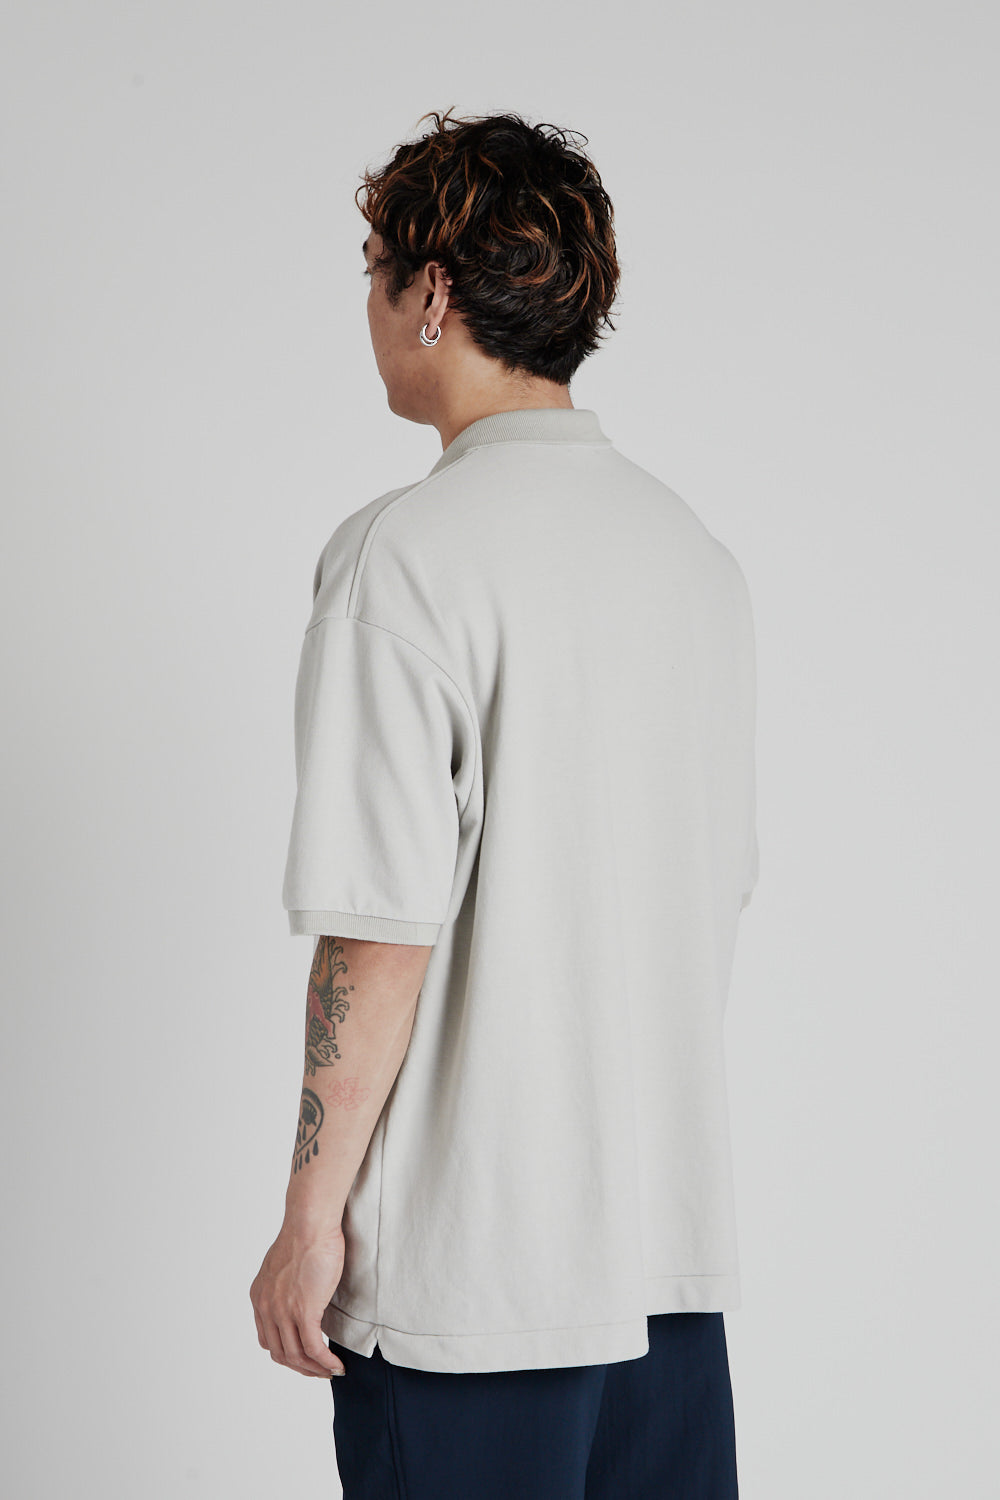 S/S Polo Shirt - Light Gray